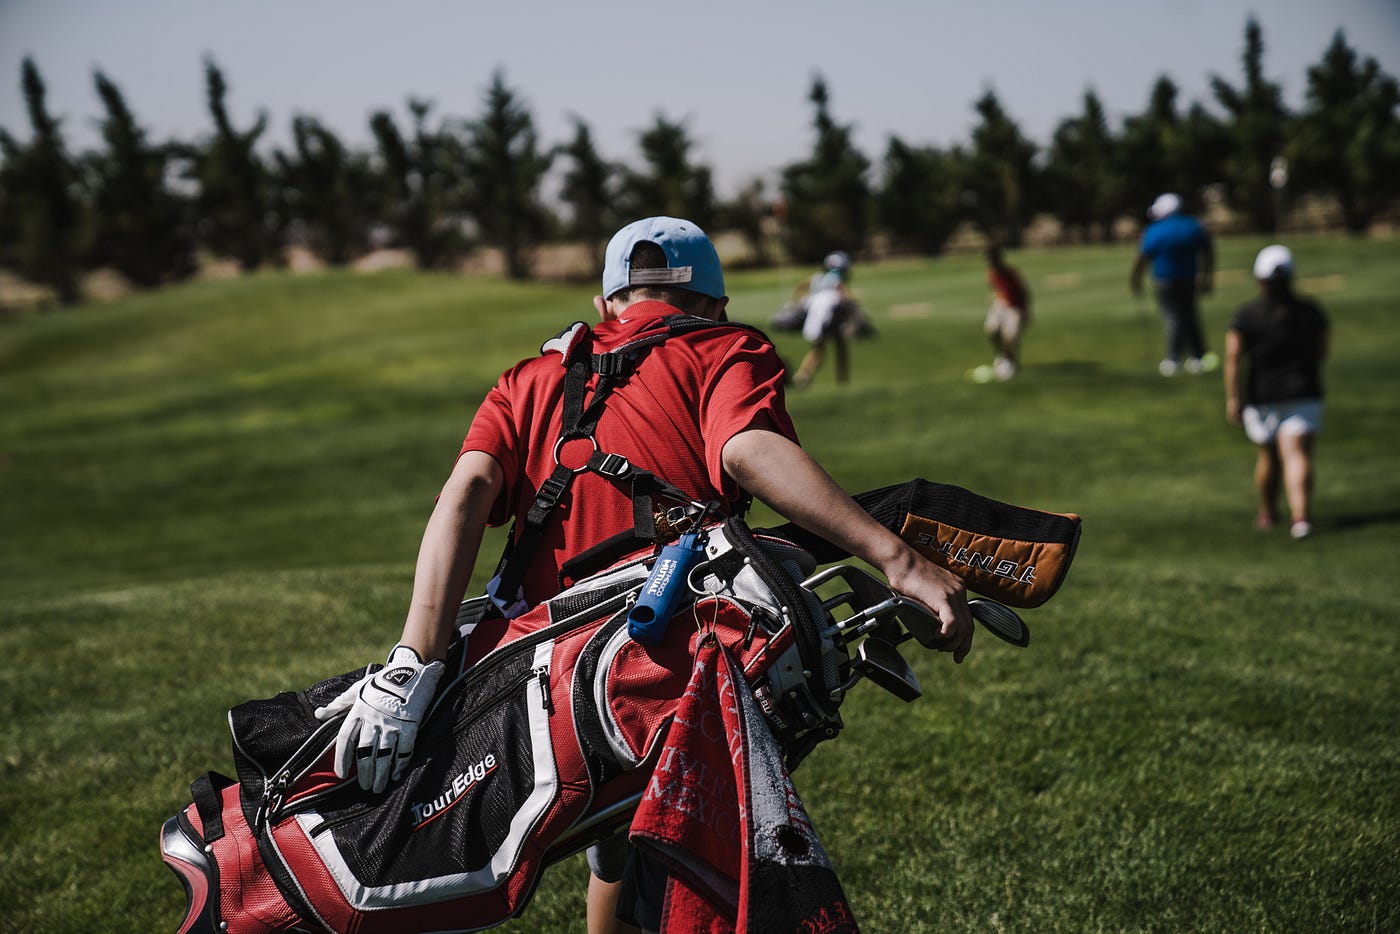 Jordan Golf Marker Lot By Country Club kicks